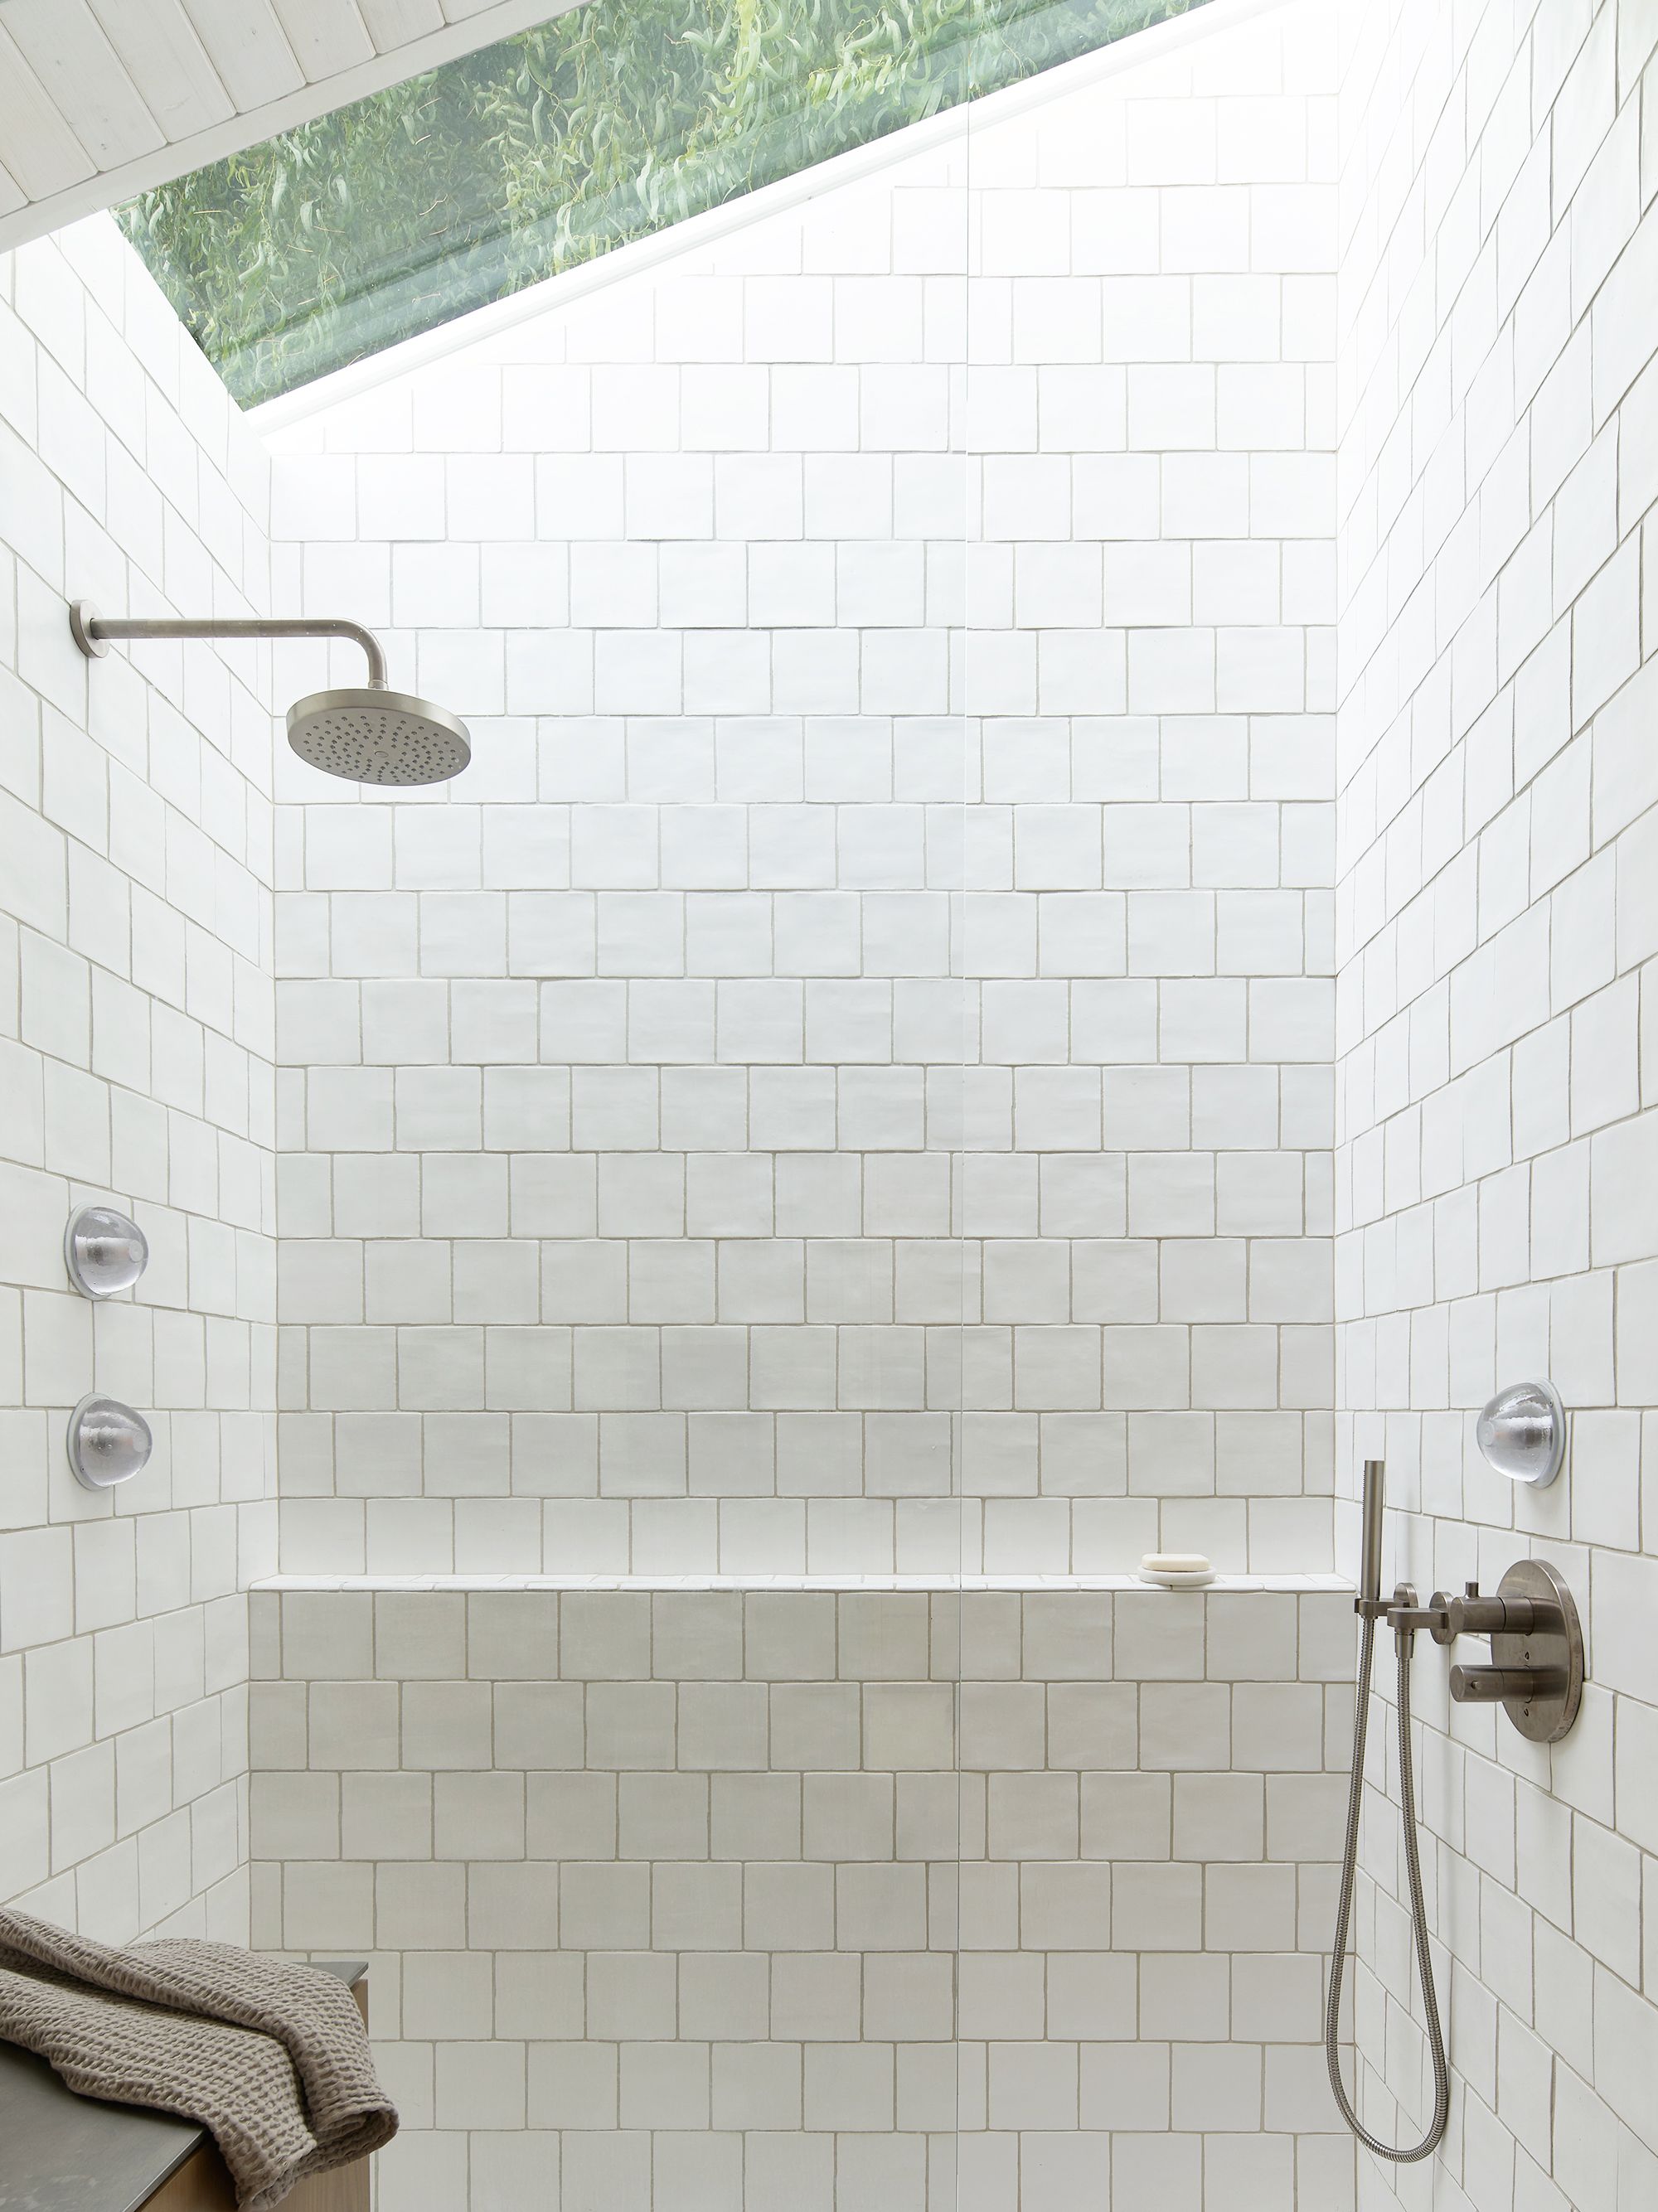 55 Bathroom Tile Ideas Bath, Tile Walls In Bathroom Or Not